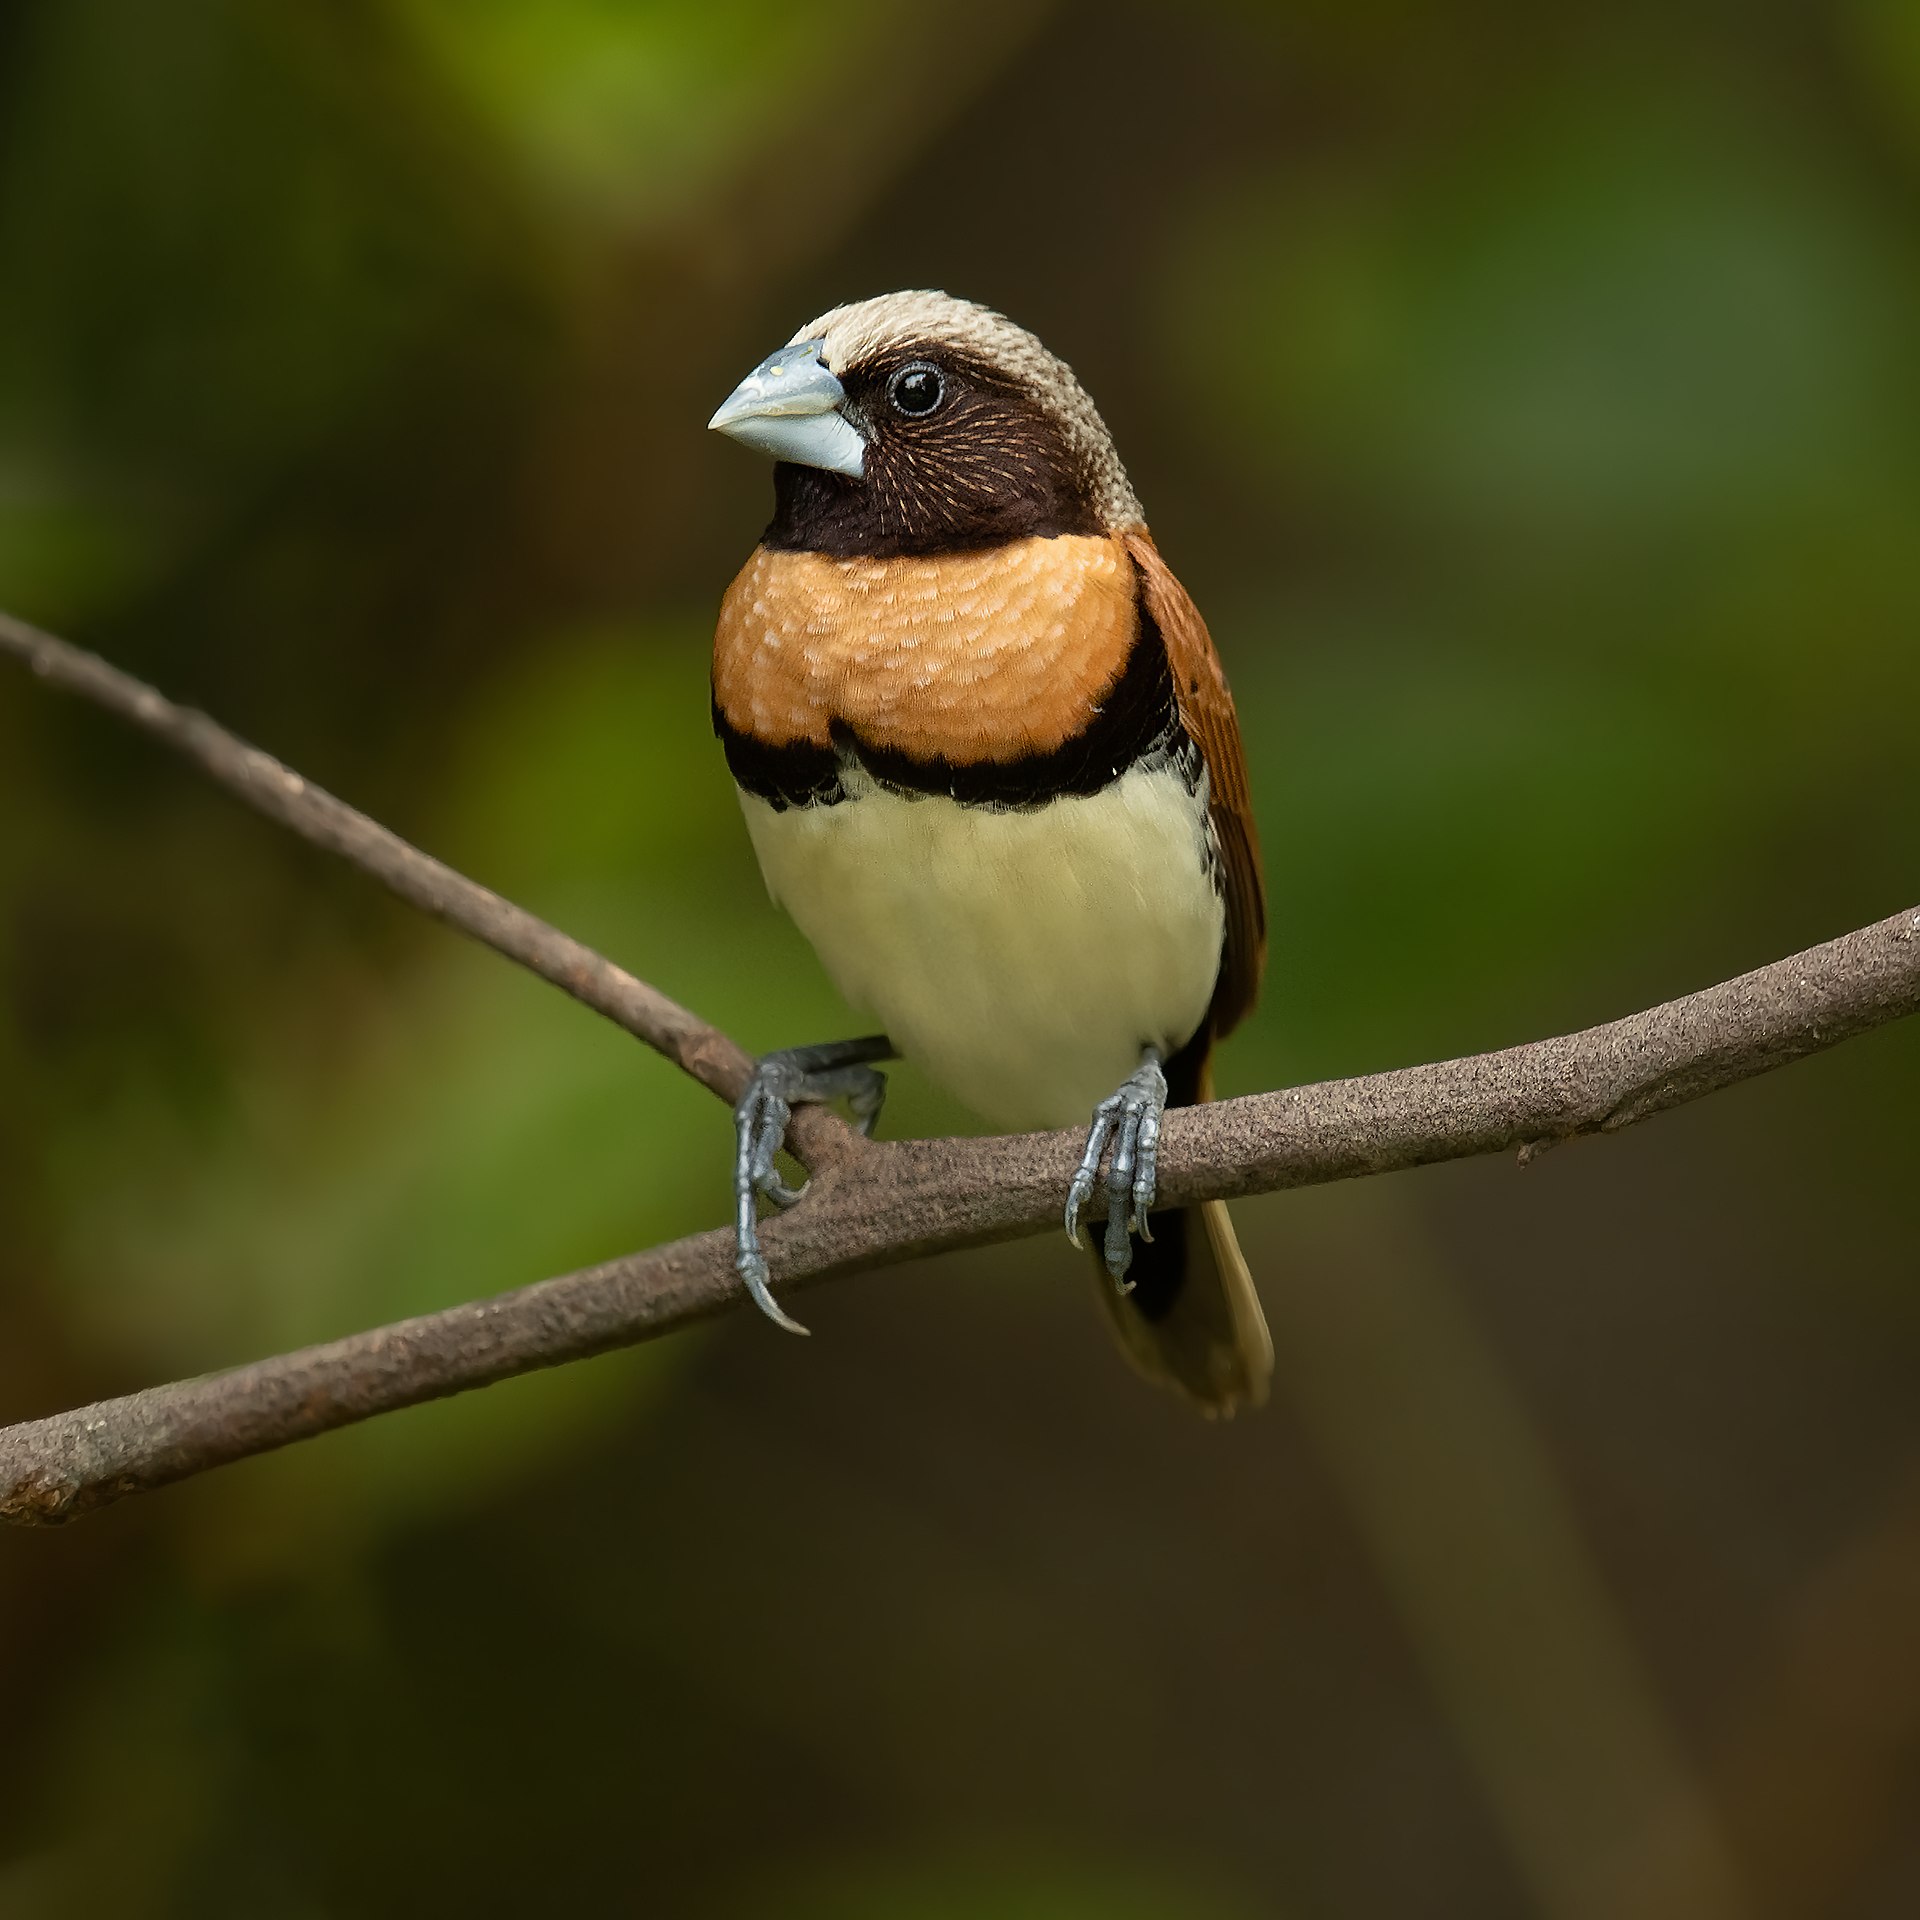 the Chestnut-breasted Mannikin sitting on a twig